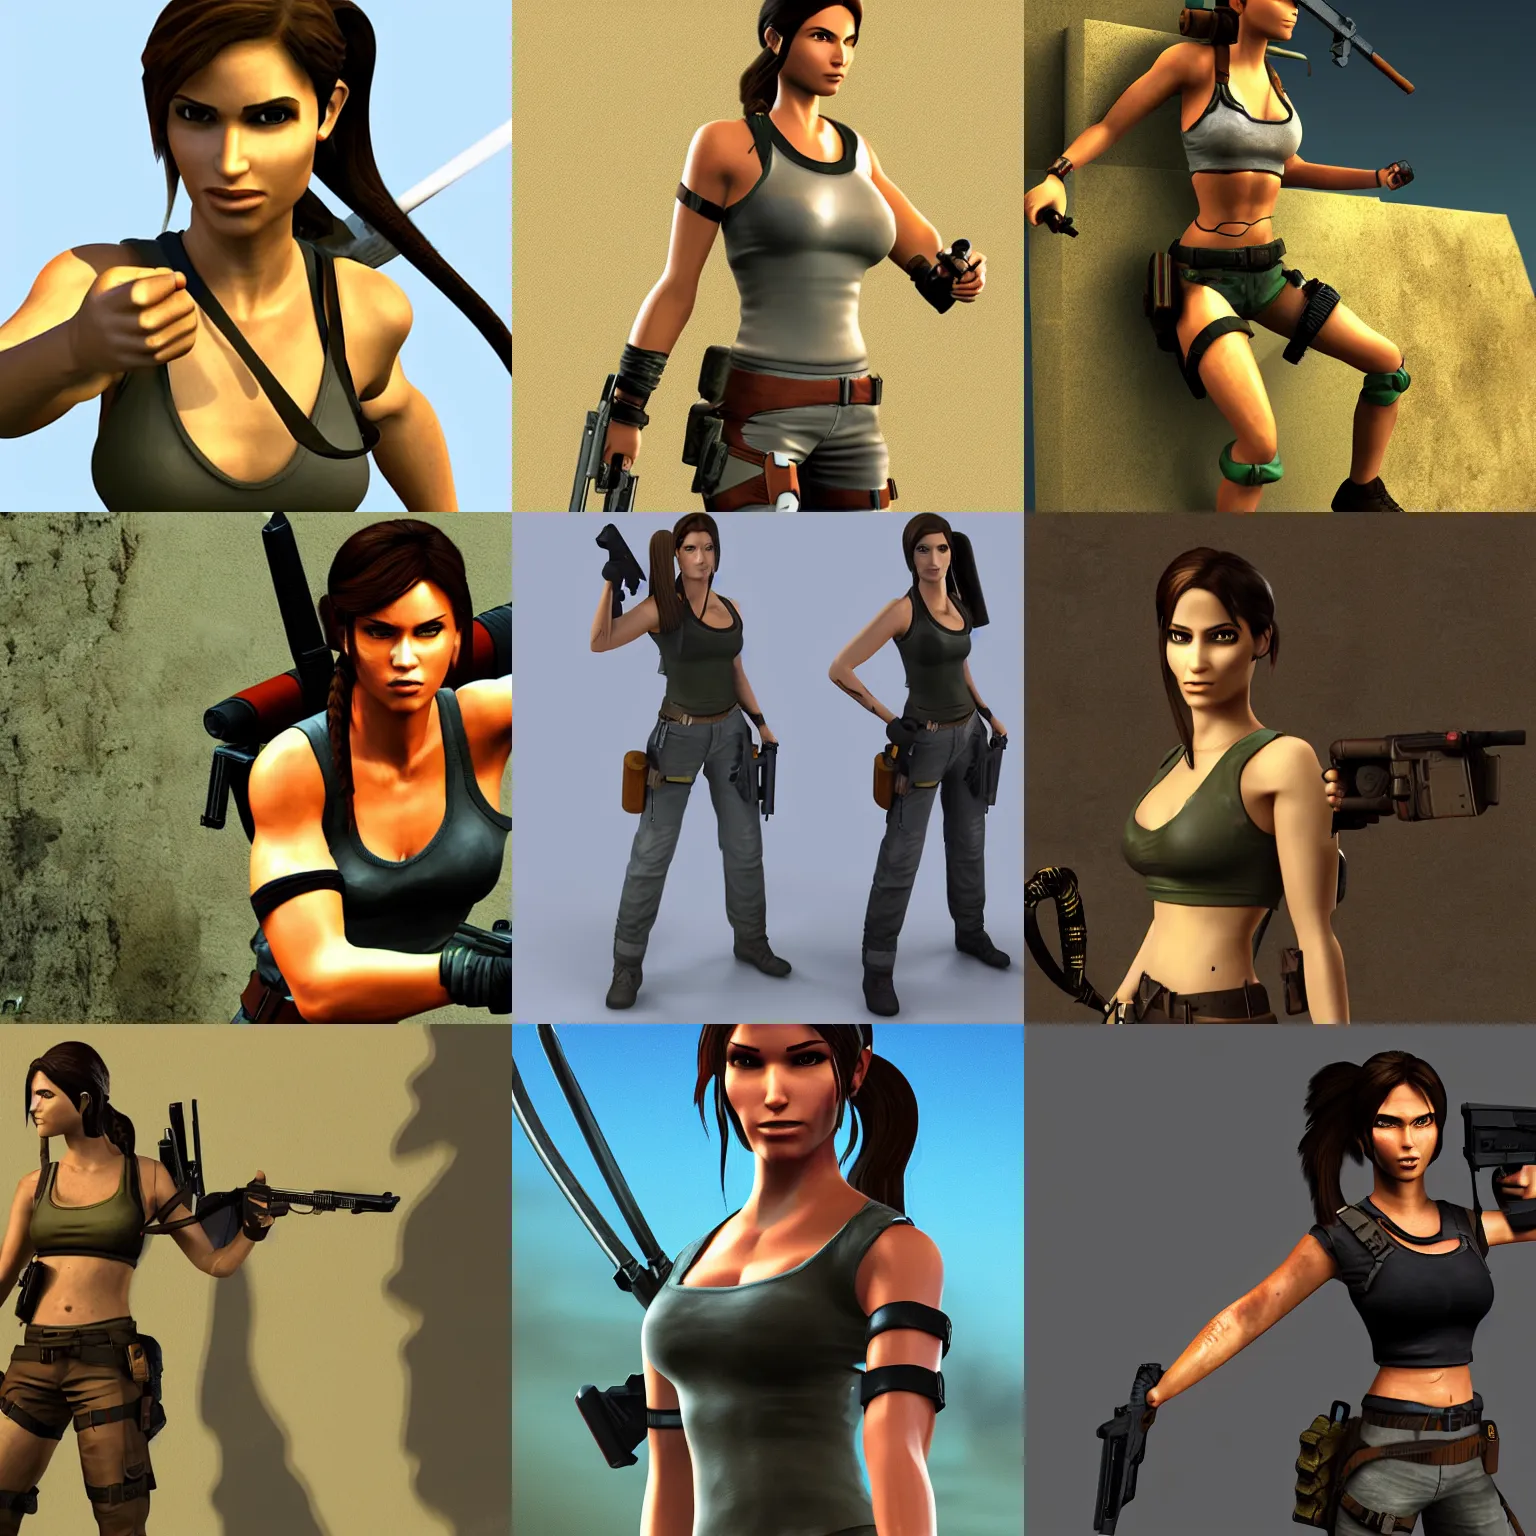 Prompt: Lara Croft (PlayStation 1 style), 3D render, promotional image, original style